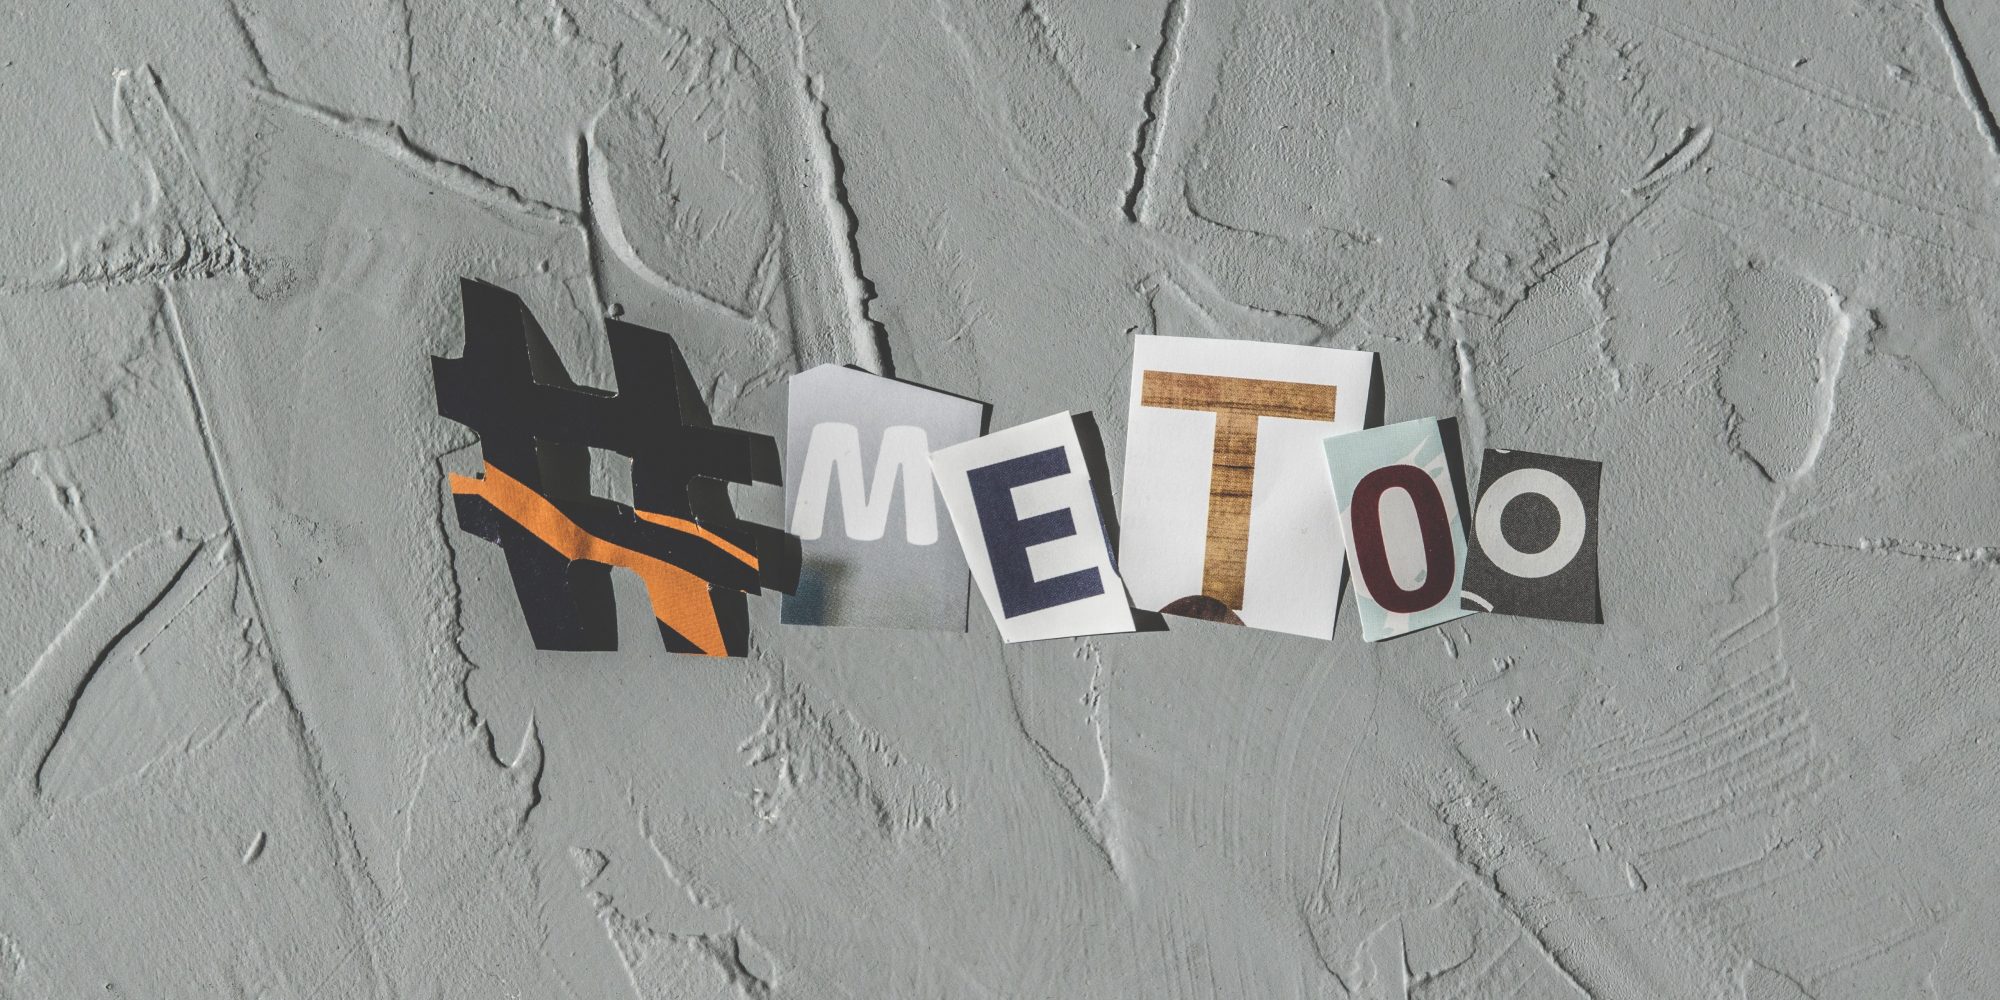 «#MetooGR: από το προσωπικό στο πολιτικό ξανά»: Μία συζήτηση που δεν πρέπει να χάσει καμία μας